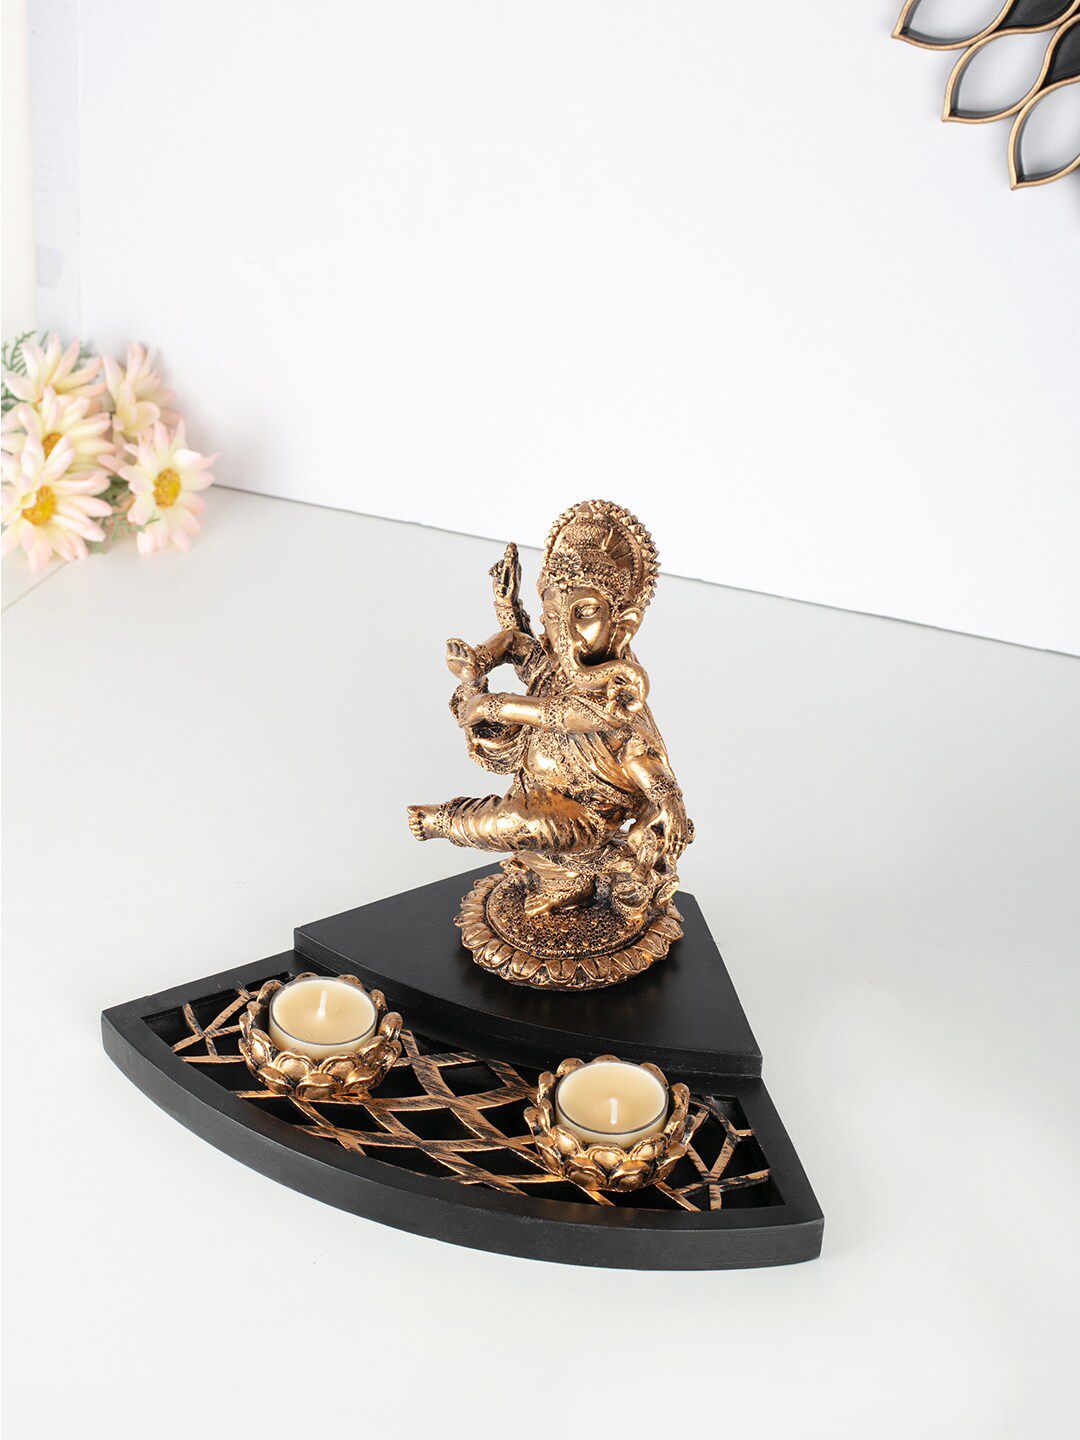 HomeTown Gold-Toned Natrag Ganesha Figurine Cum T-Light Holder Showpieces Price in India